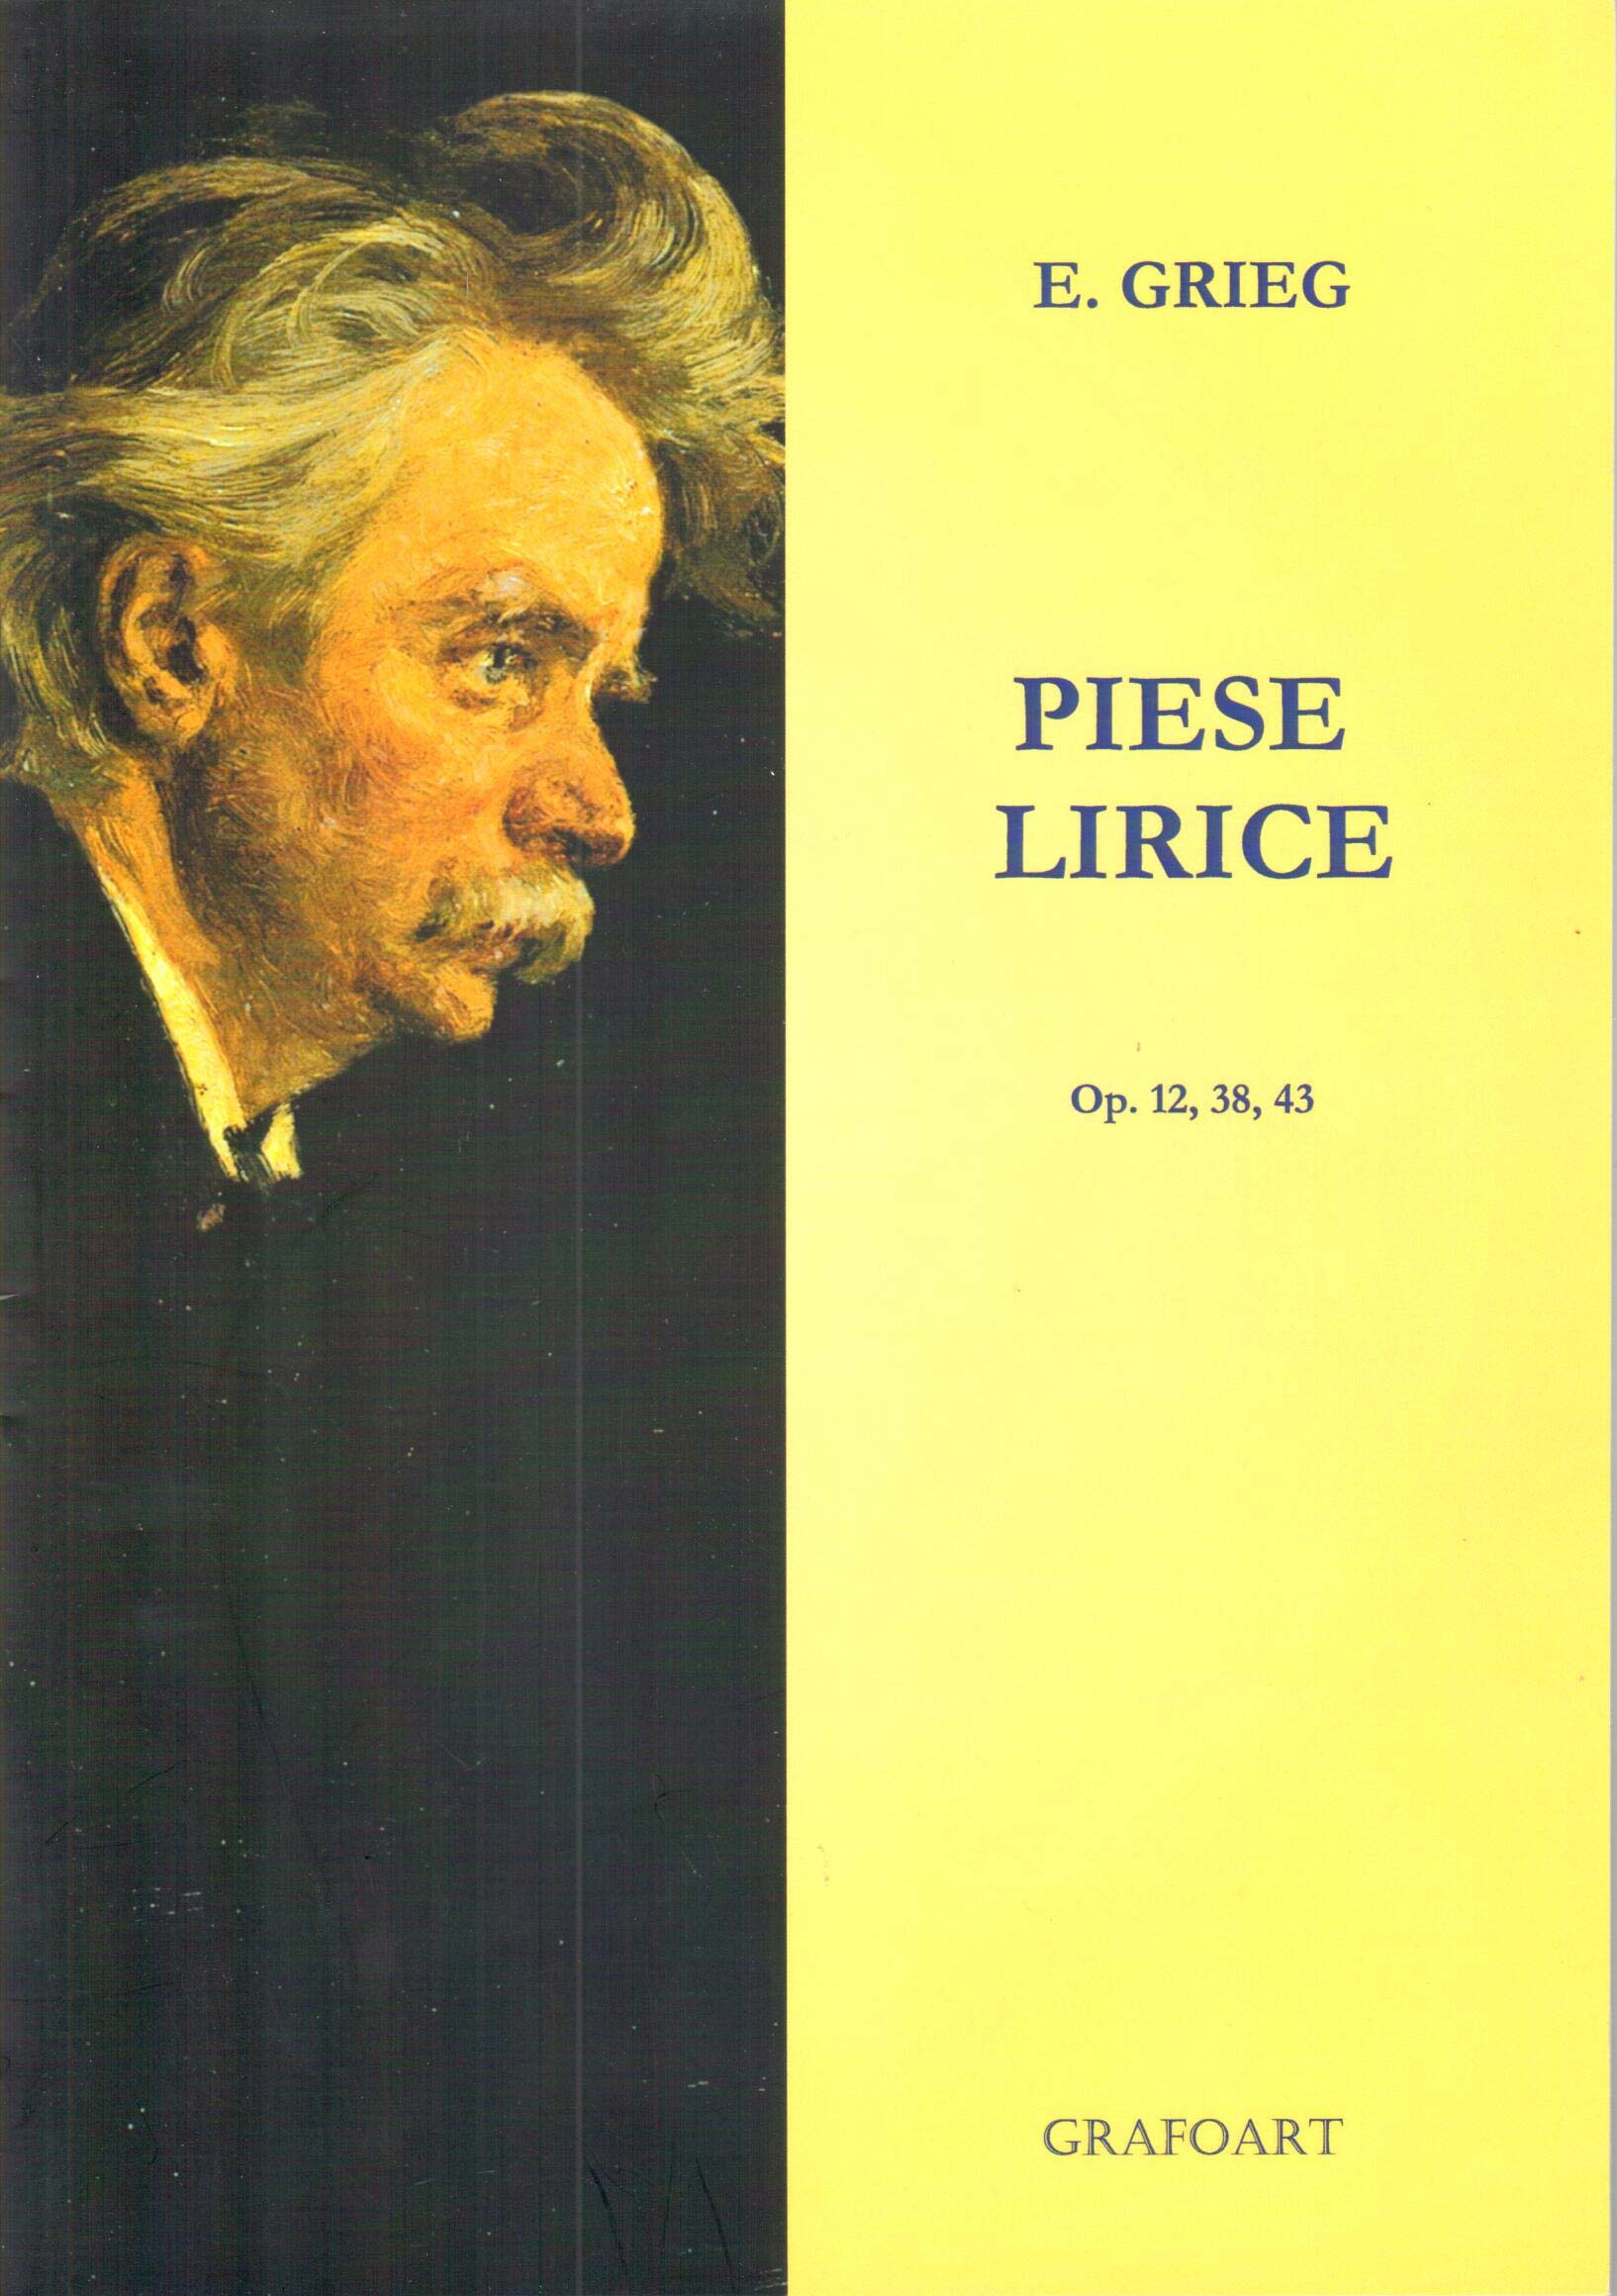 Piese lirice – Op. 12, 38, 43 | E. Grieg carturesti.ro Arta, arhitectura